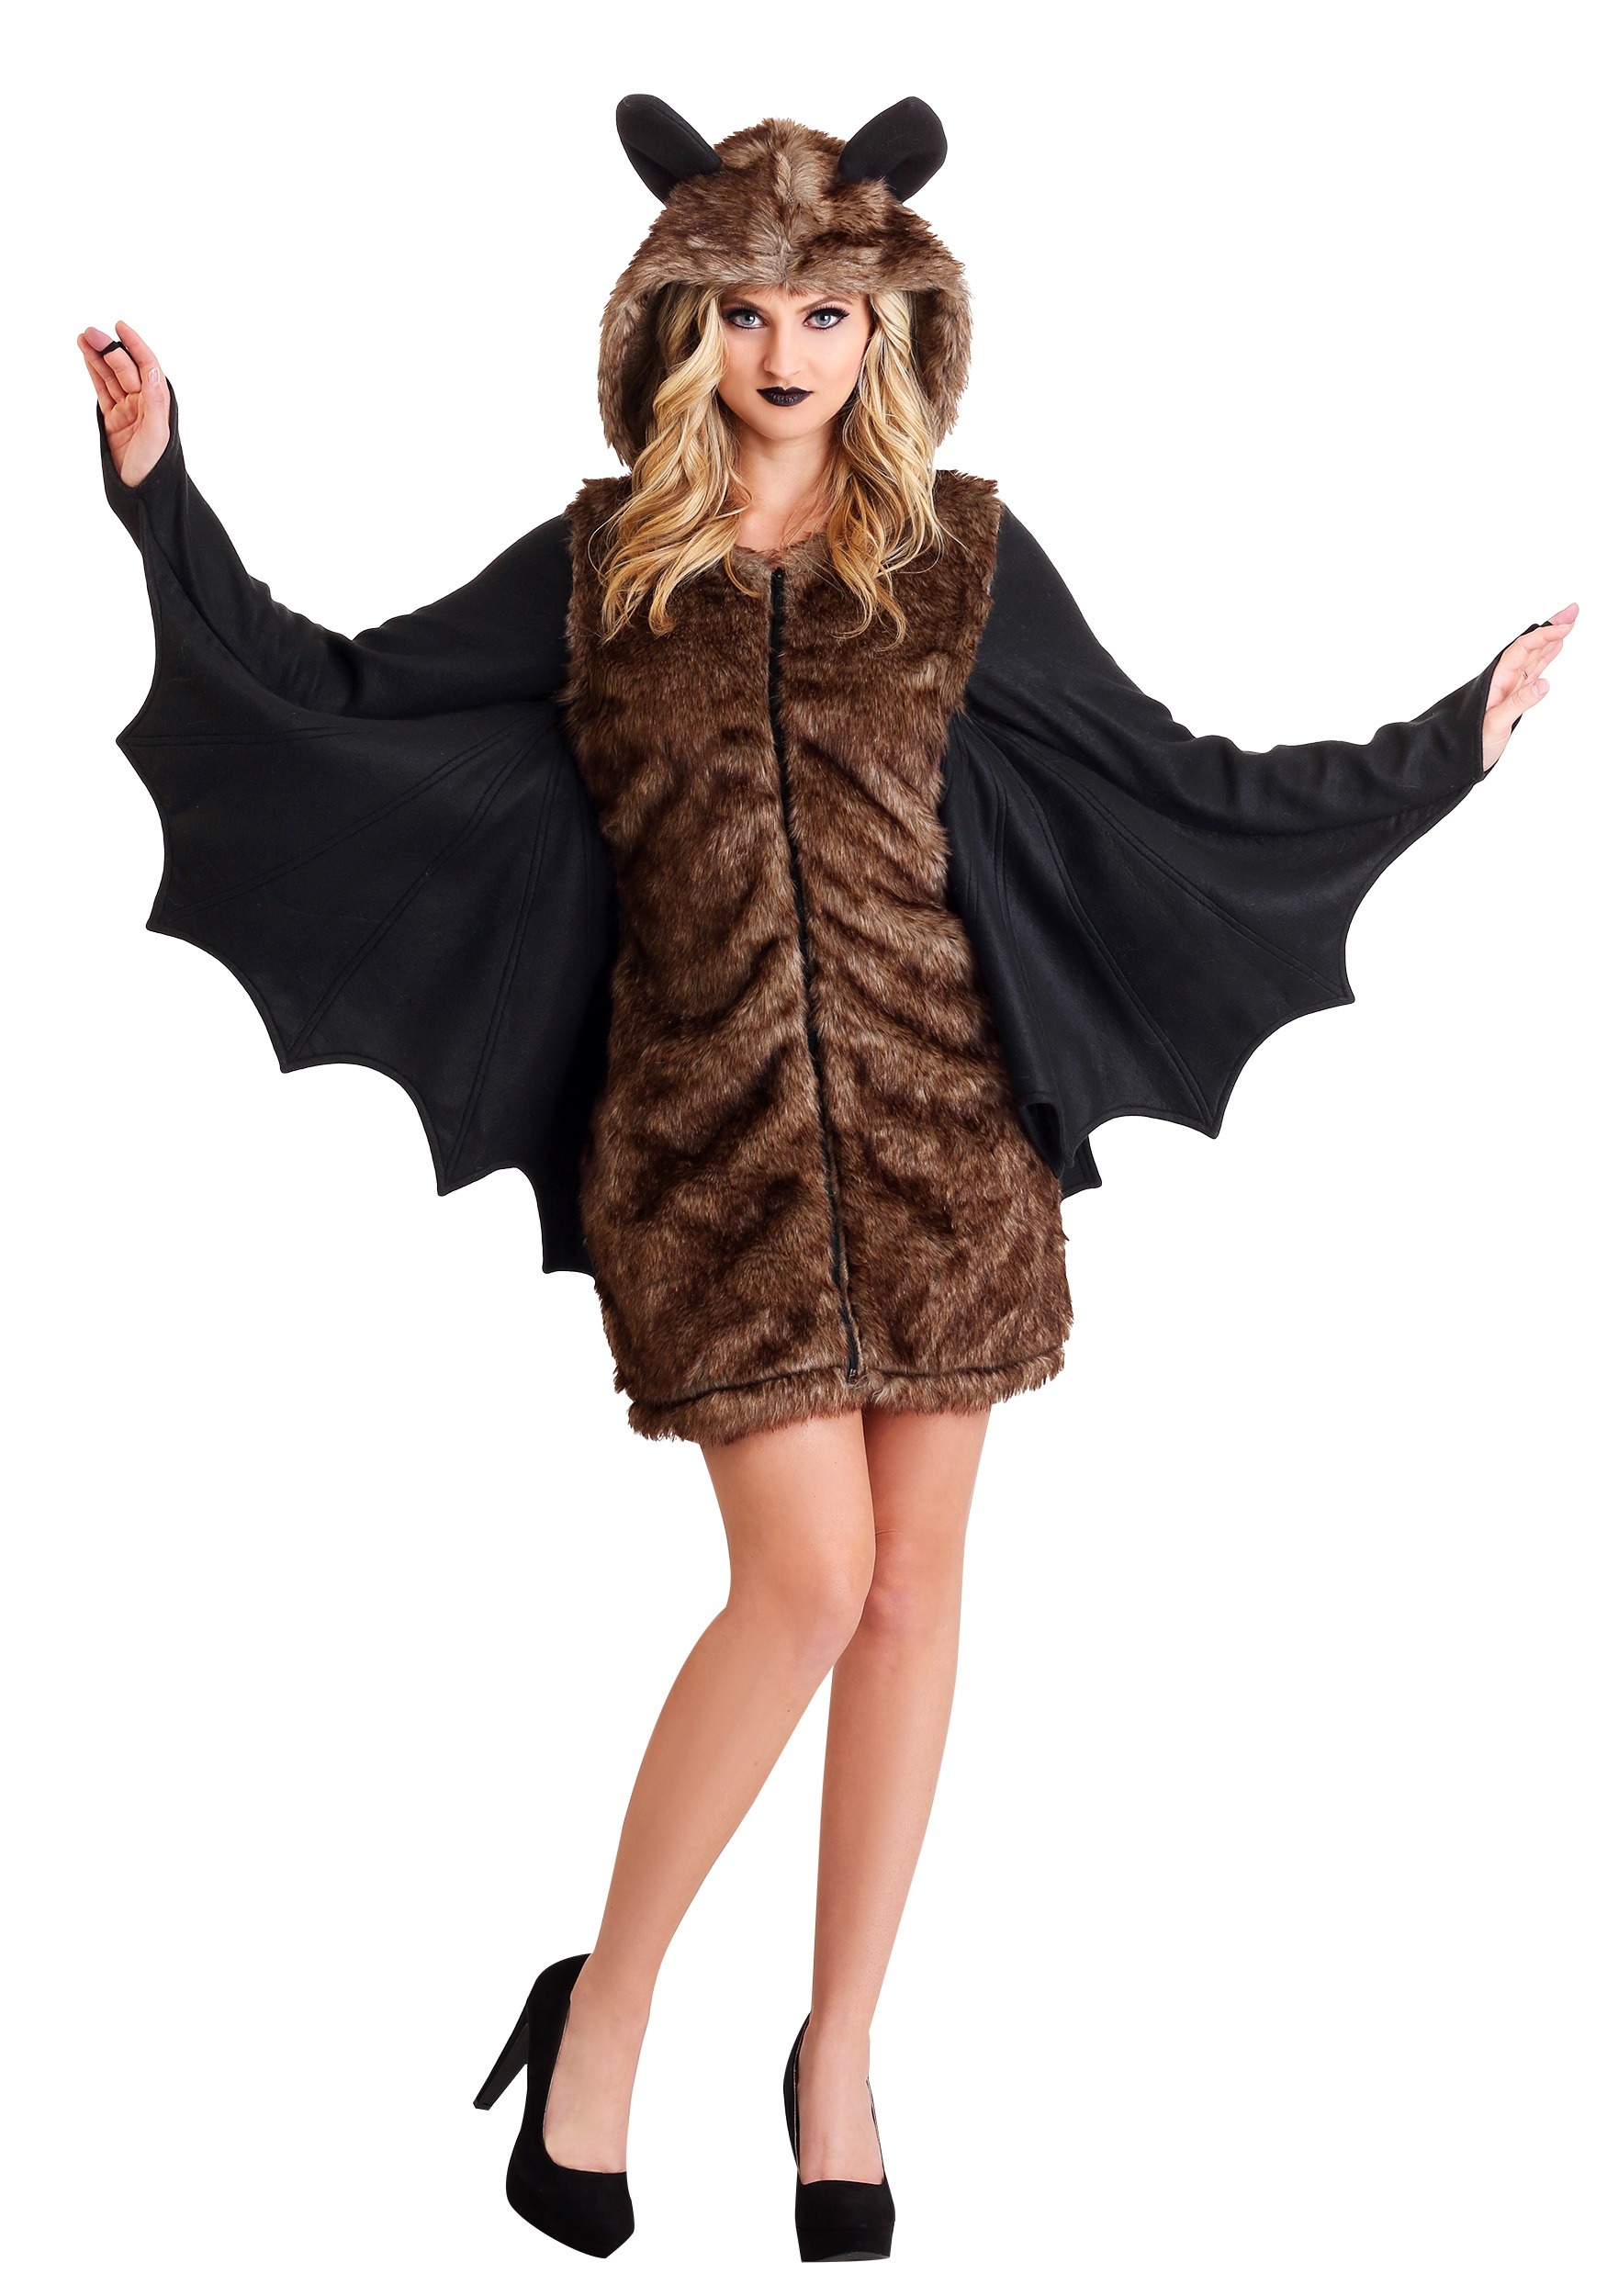 Photos - Fancy Dress Deluxe FUN Costumes  Bat Women's Costume Black/Brown FUN4067AD 